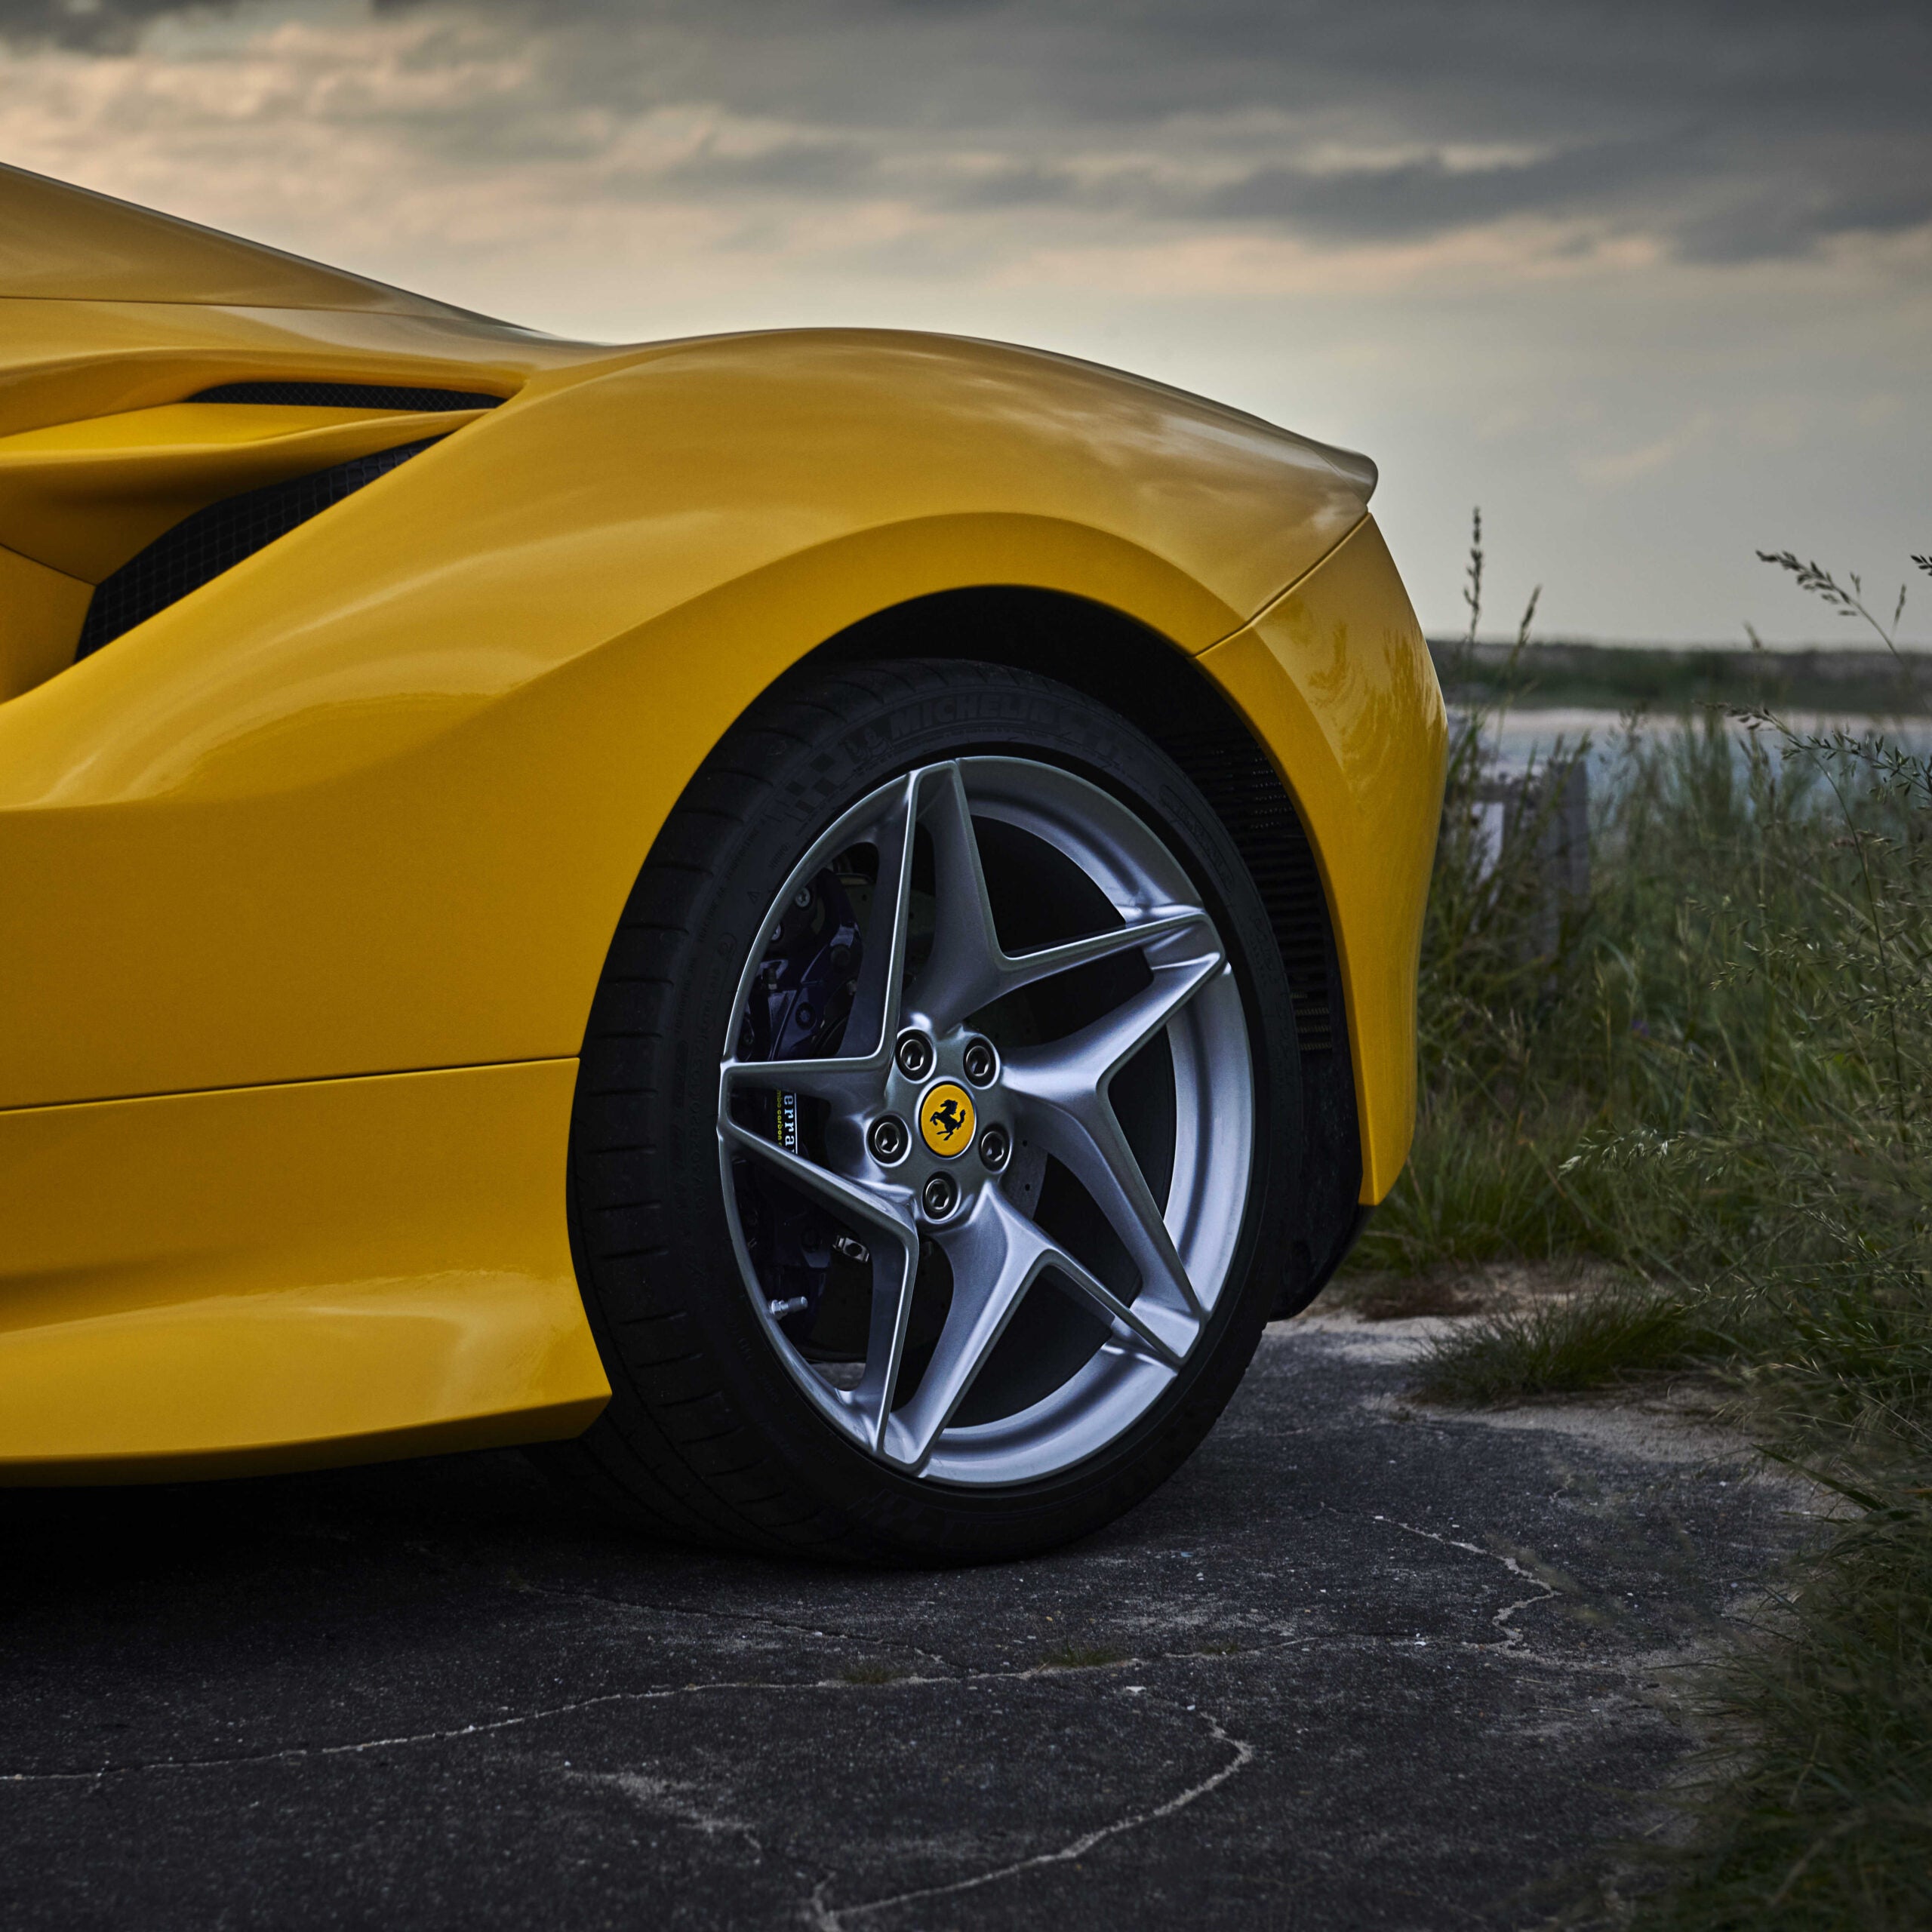 The Technological Craftsmanship Behind the Ferrari F8 Spider